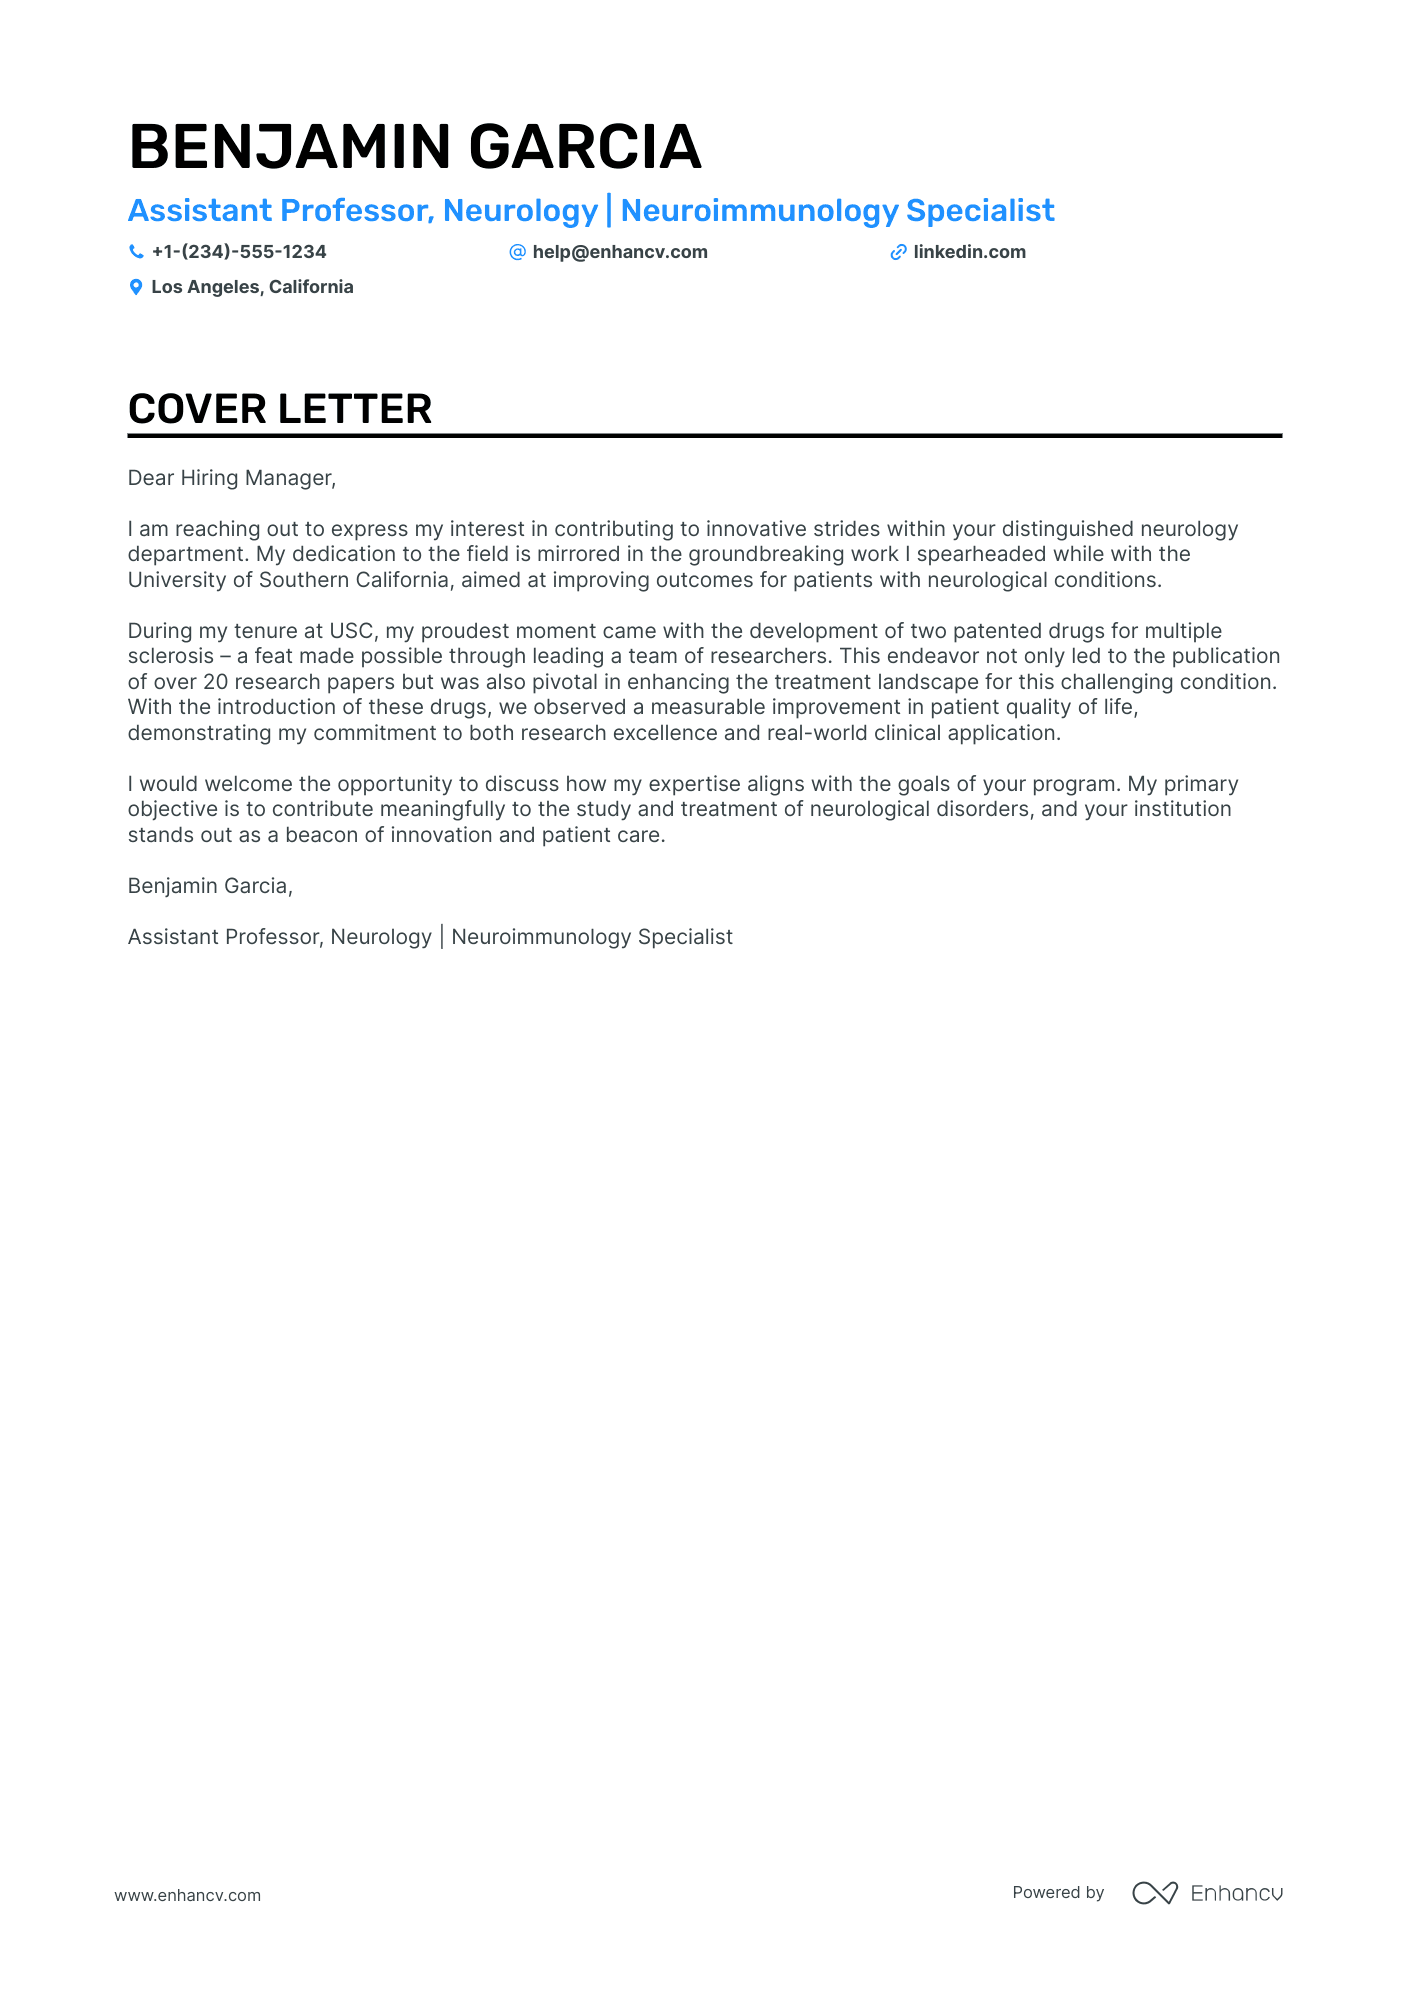 cover letter template for professor position